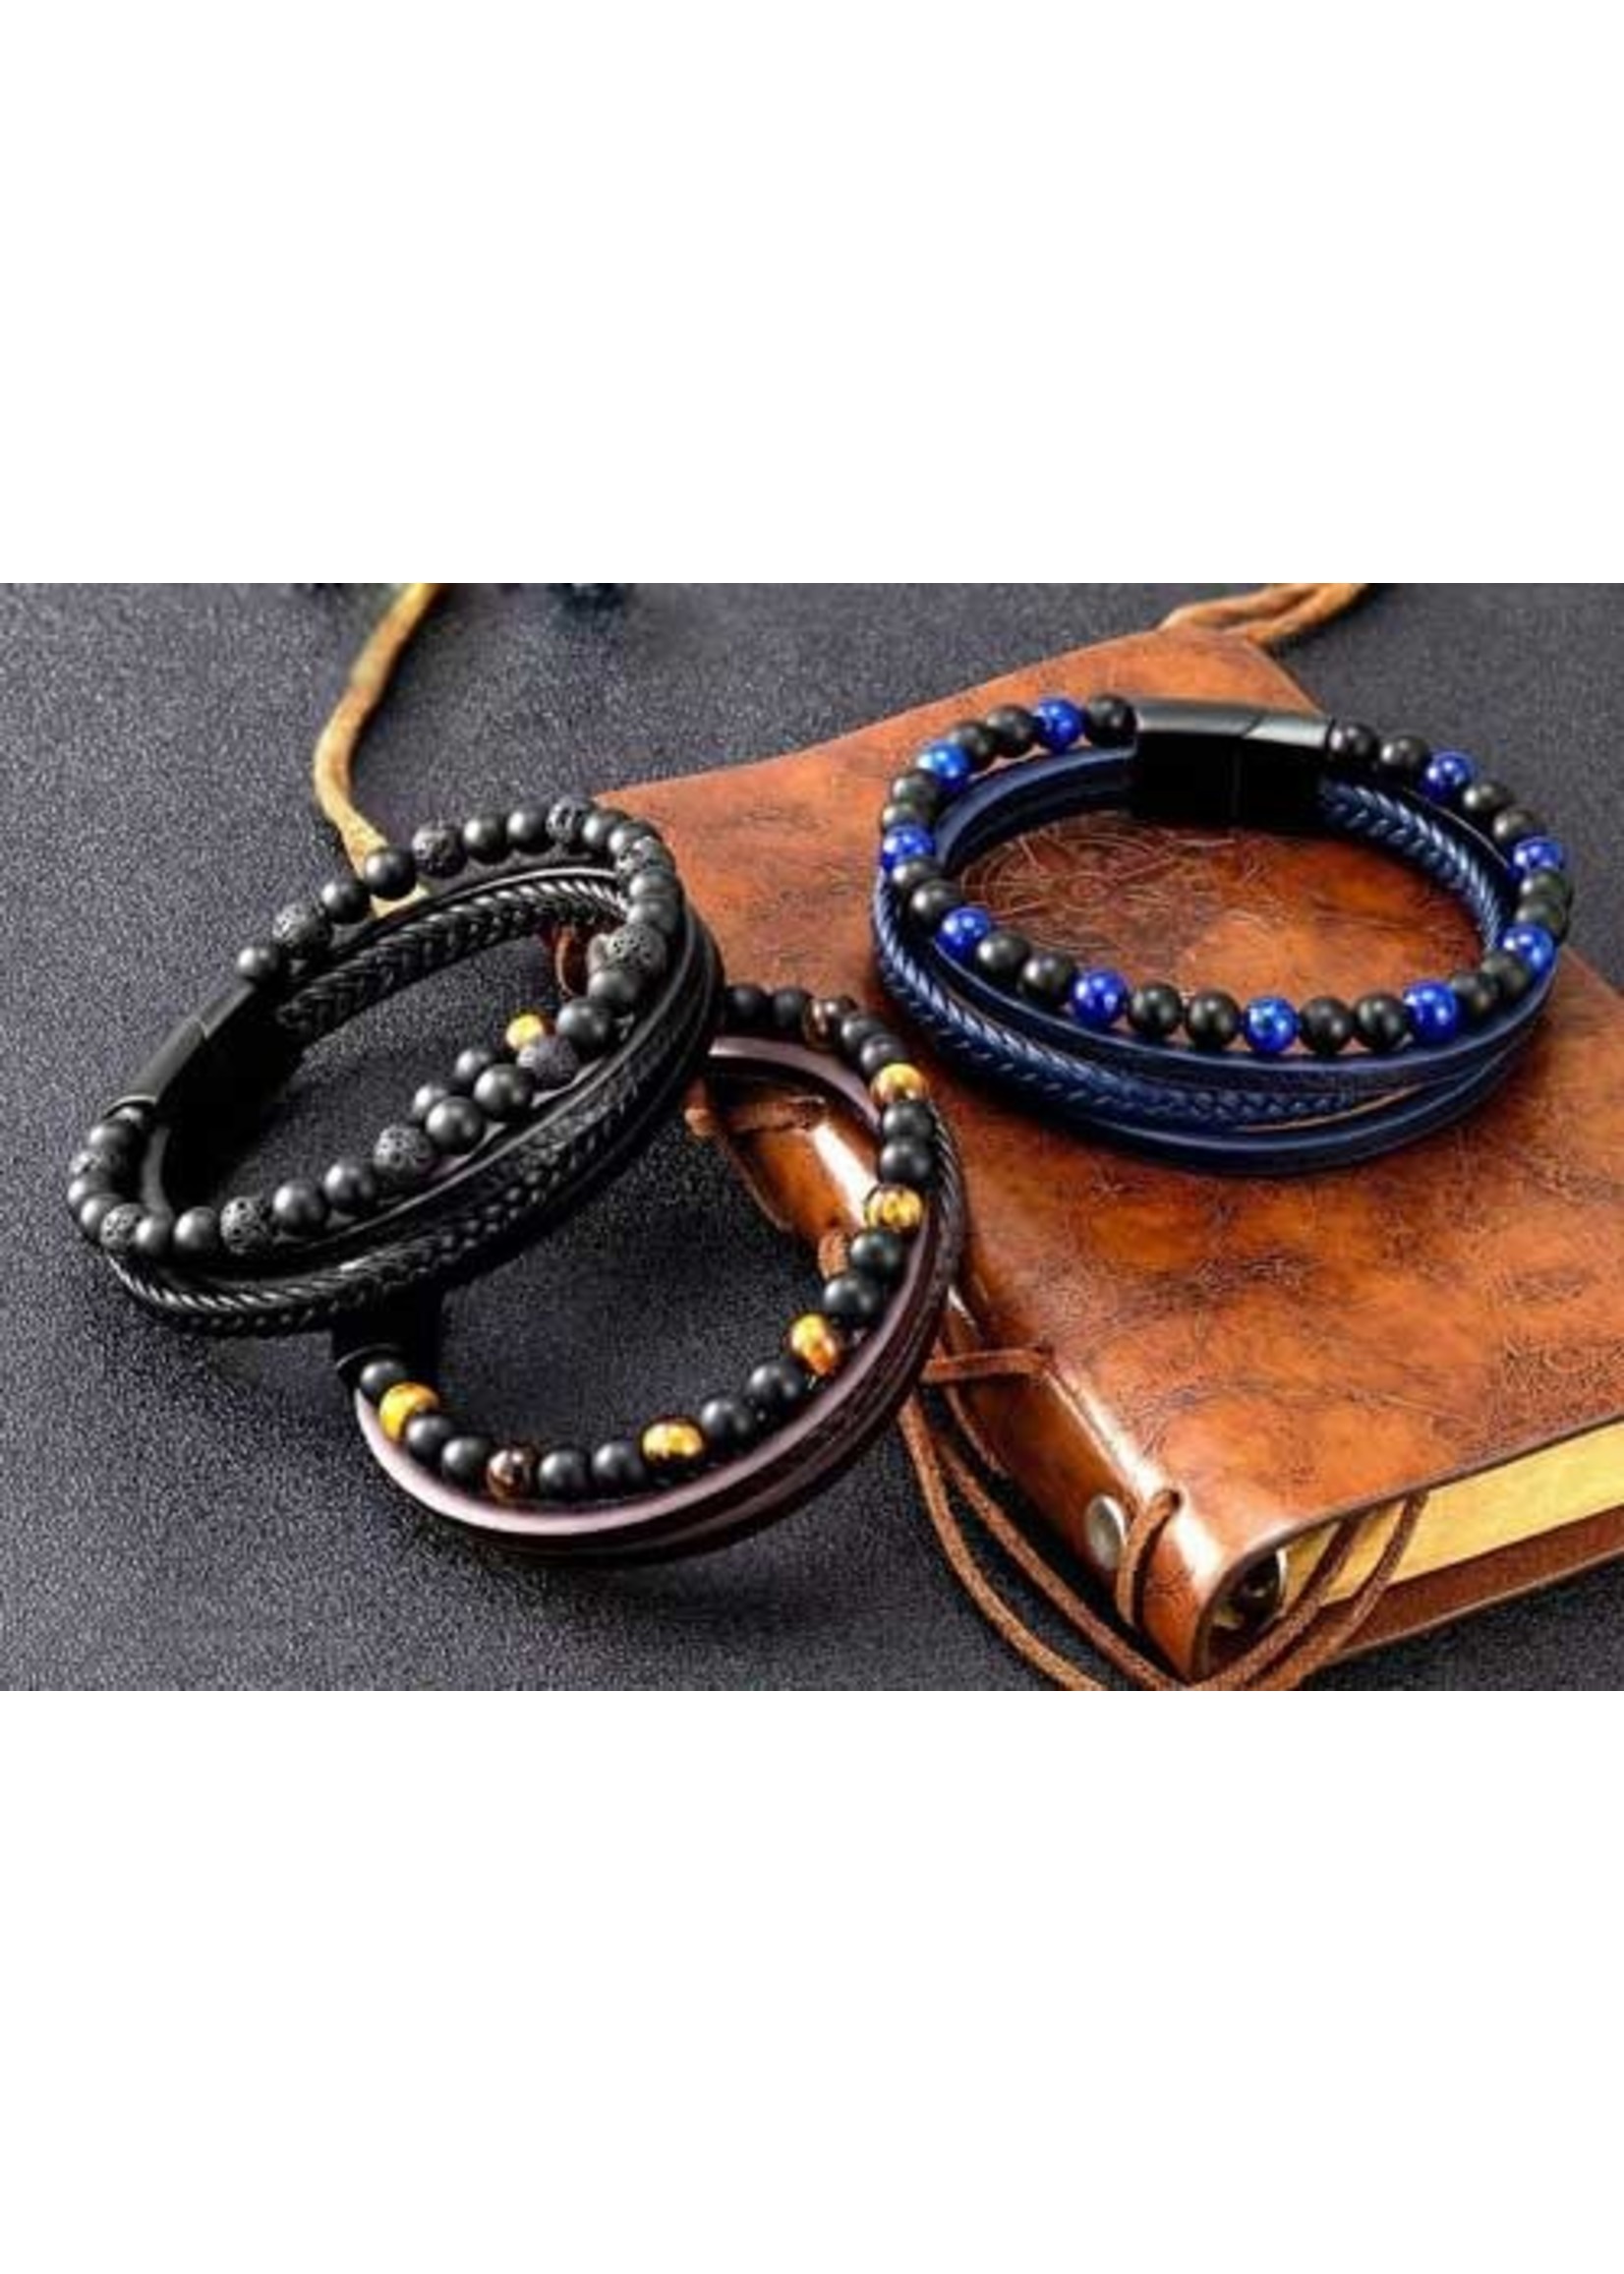 Men’s Leather Bracelet with Tiger’s Eye